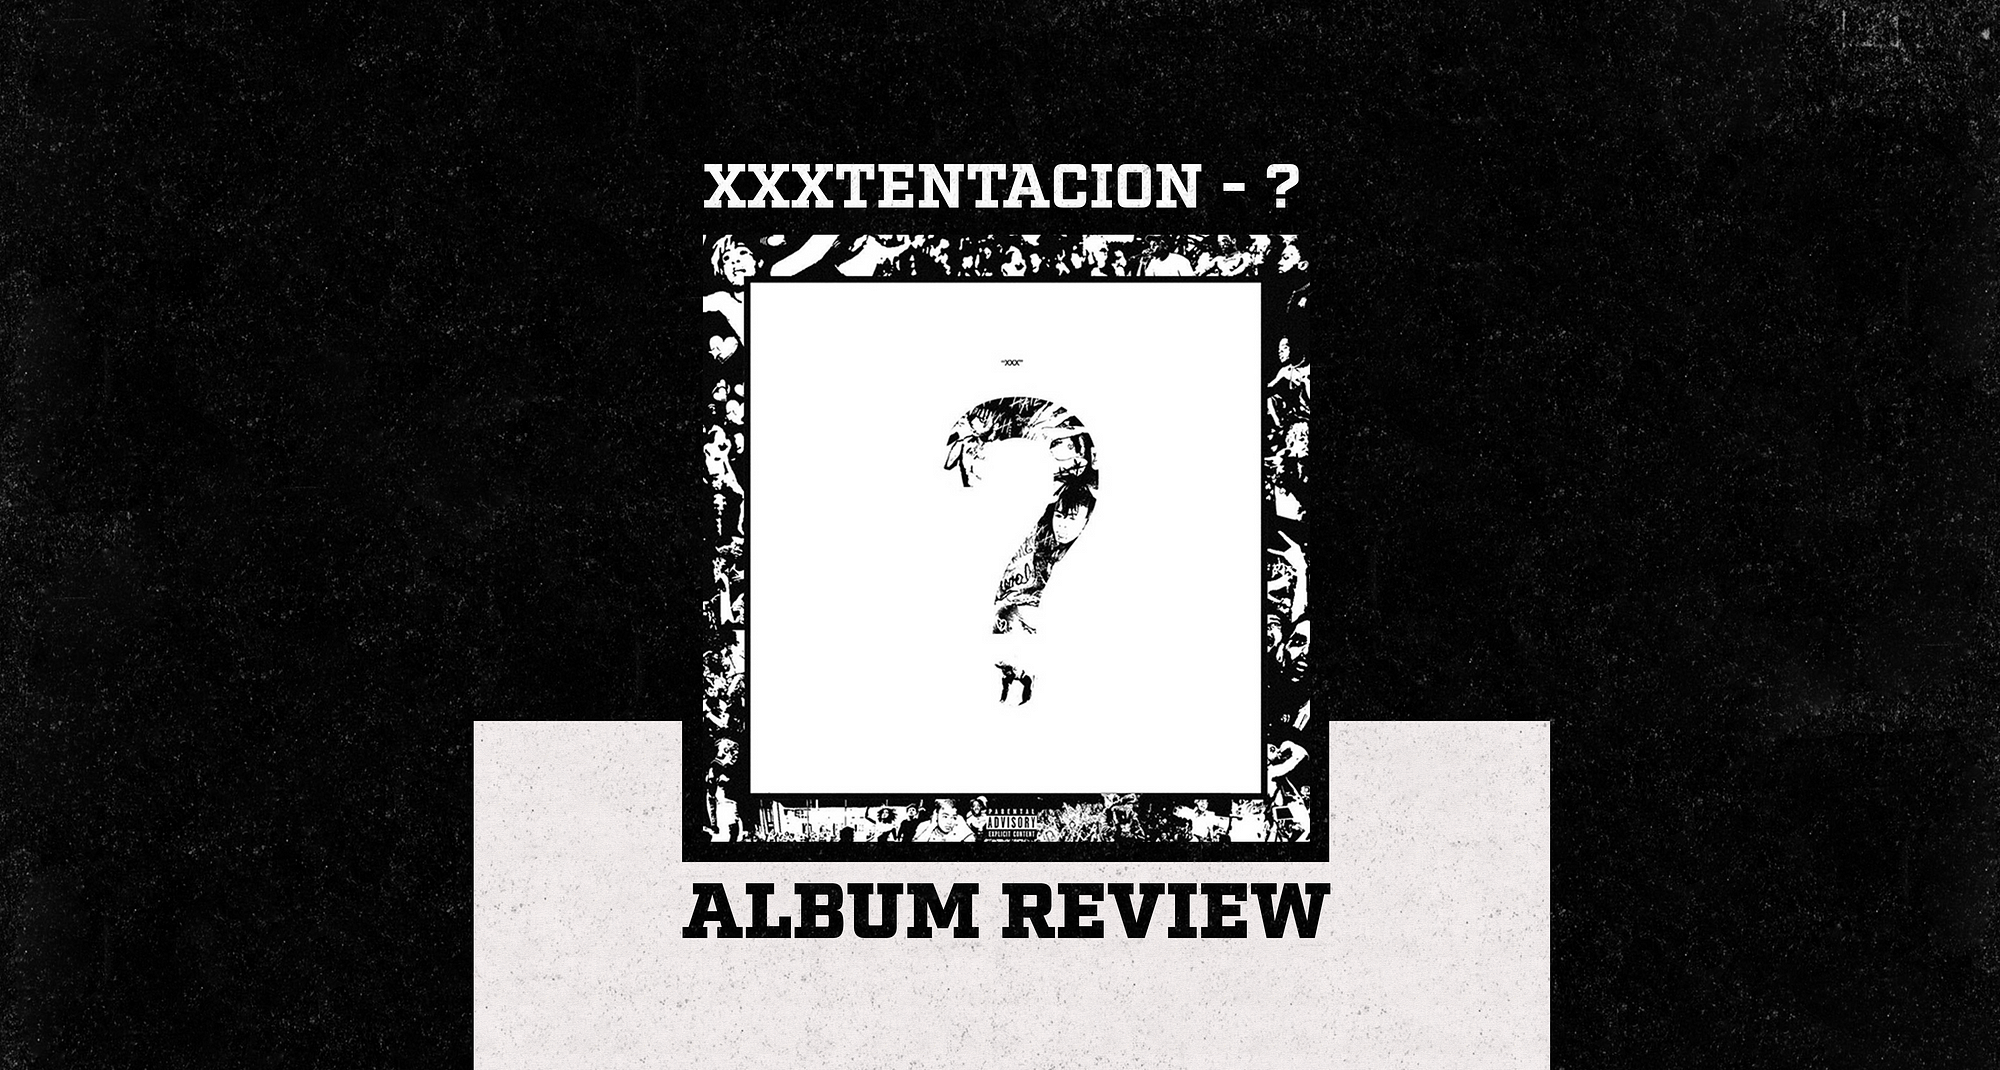 XXXTentacion discography - Wikipedia